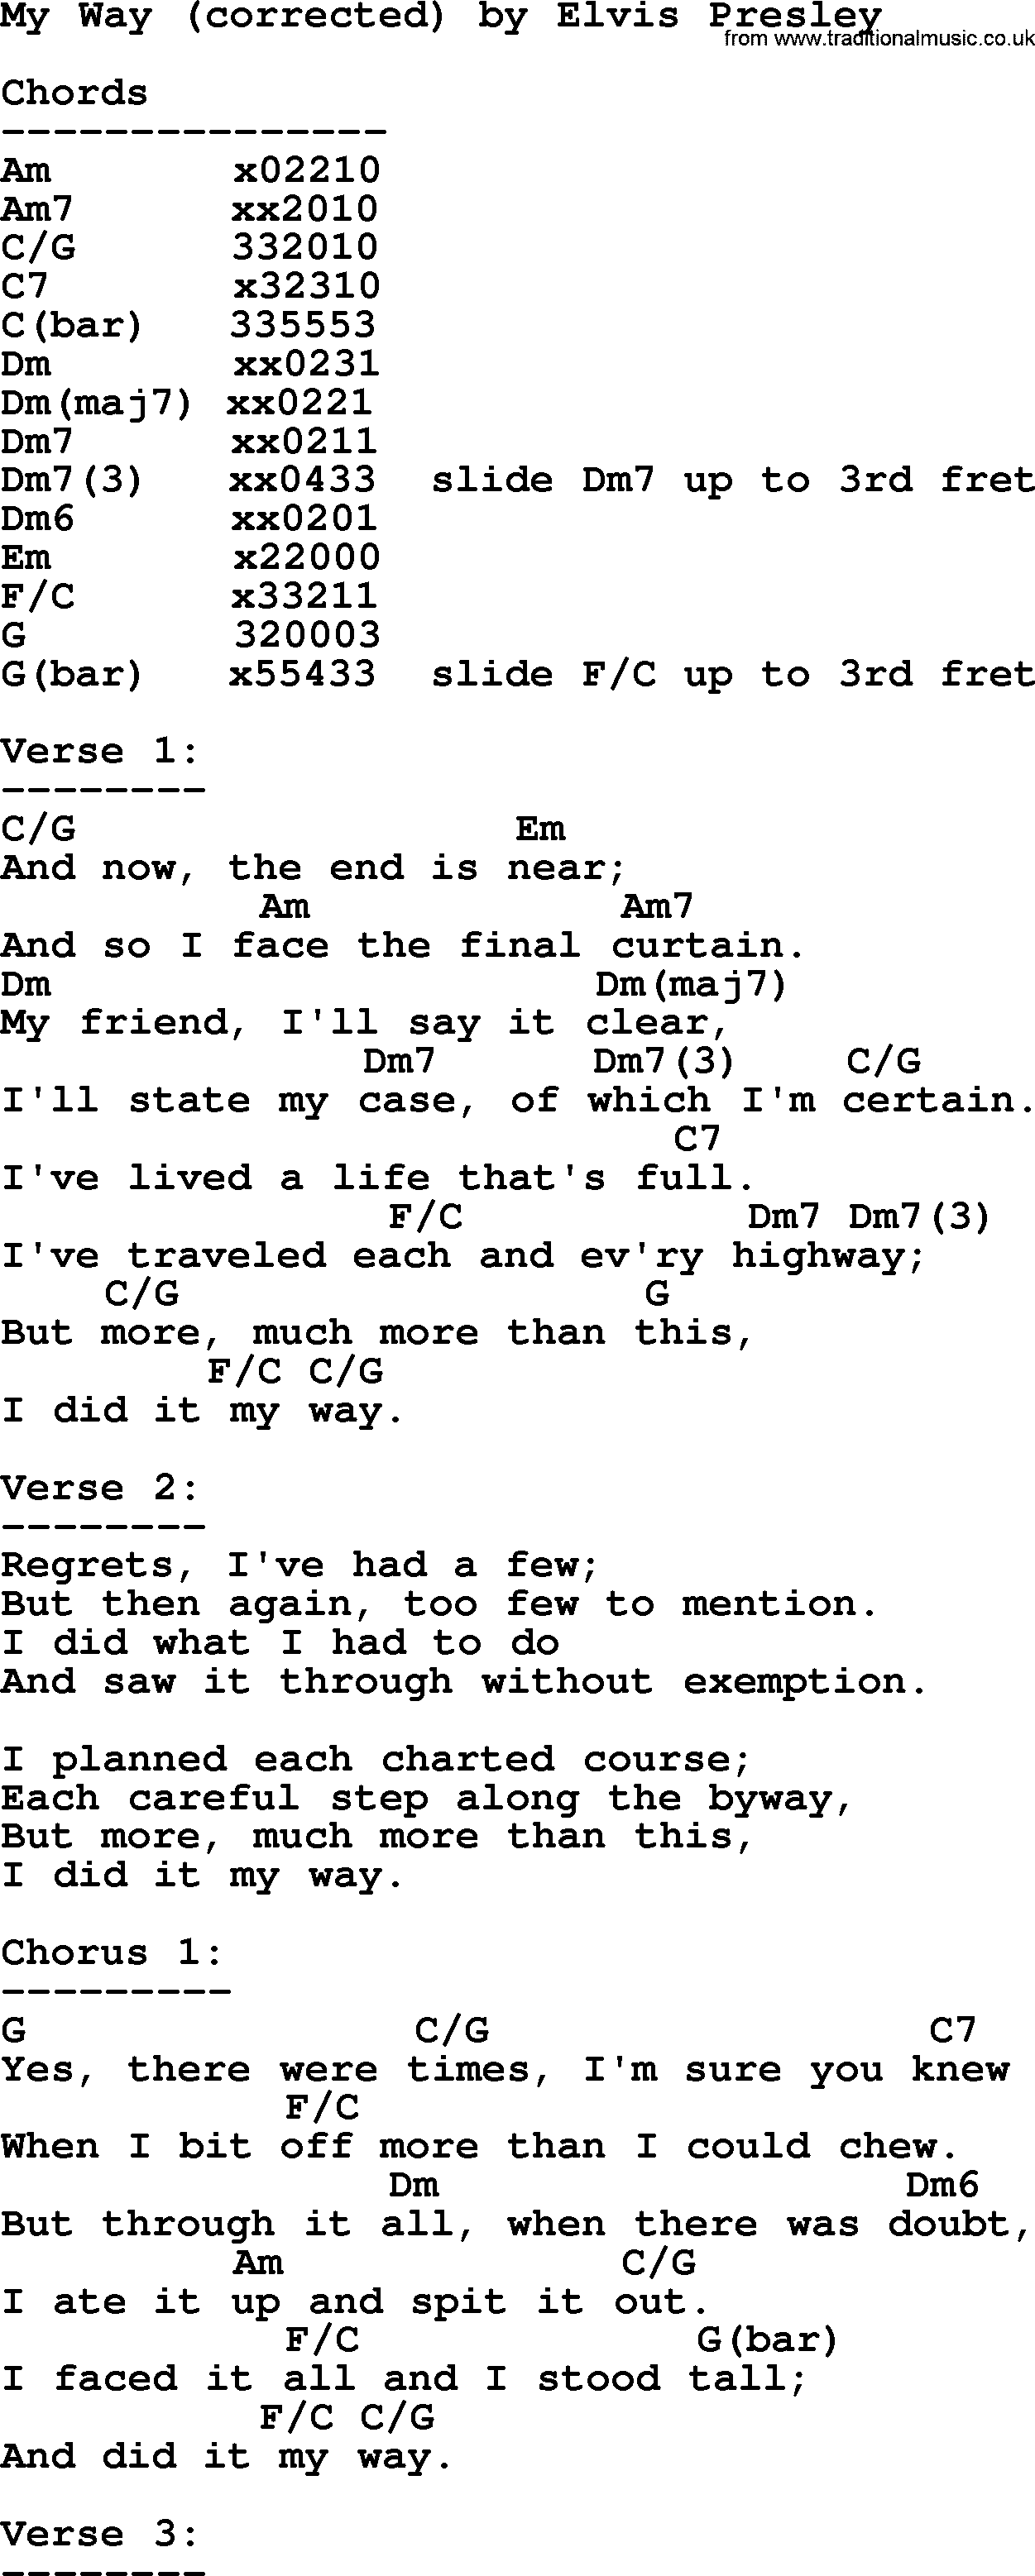 Elvis Presley song: My Way (corrected), lyrics and chords